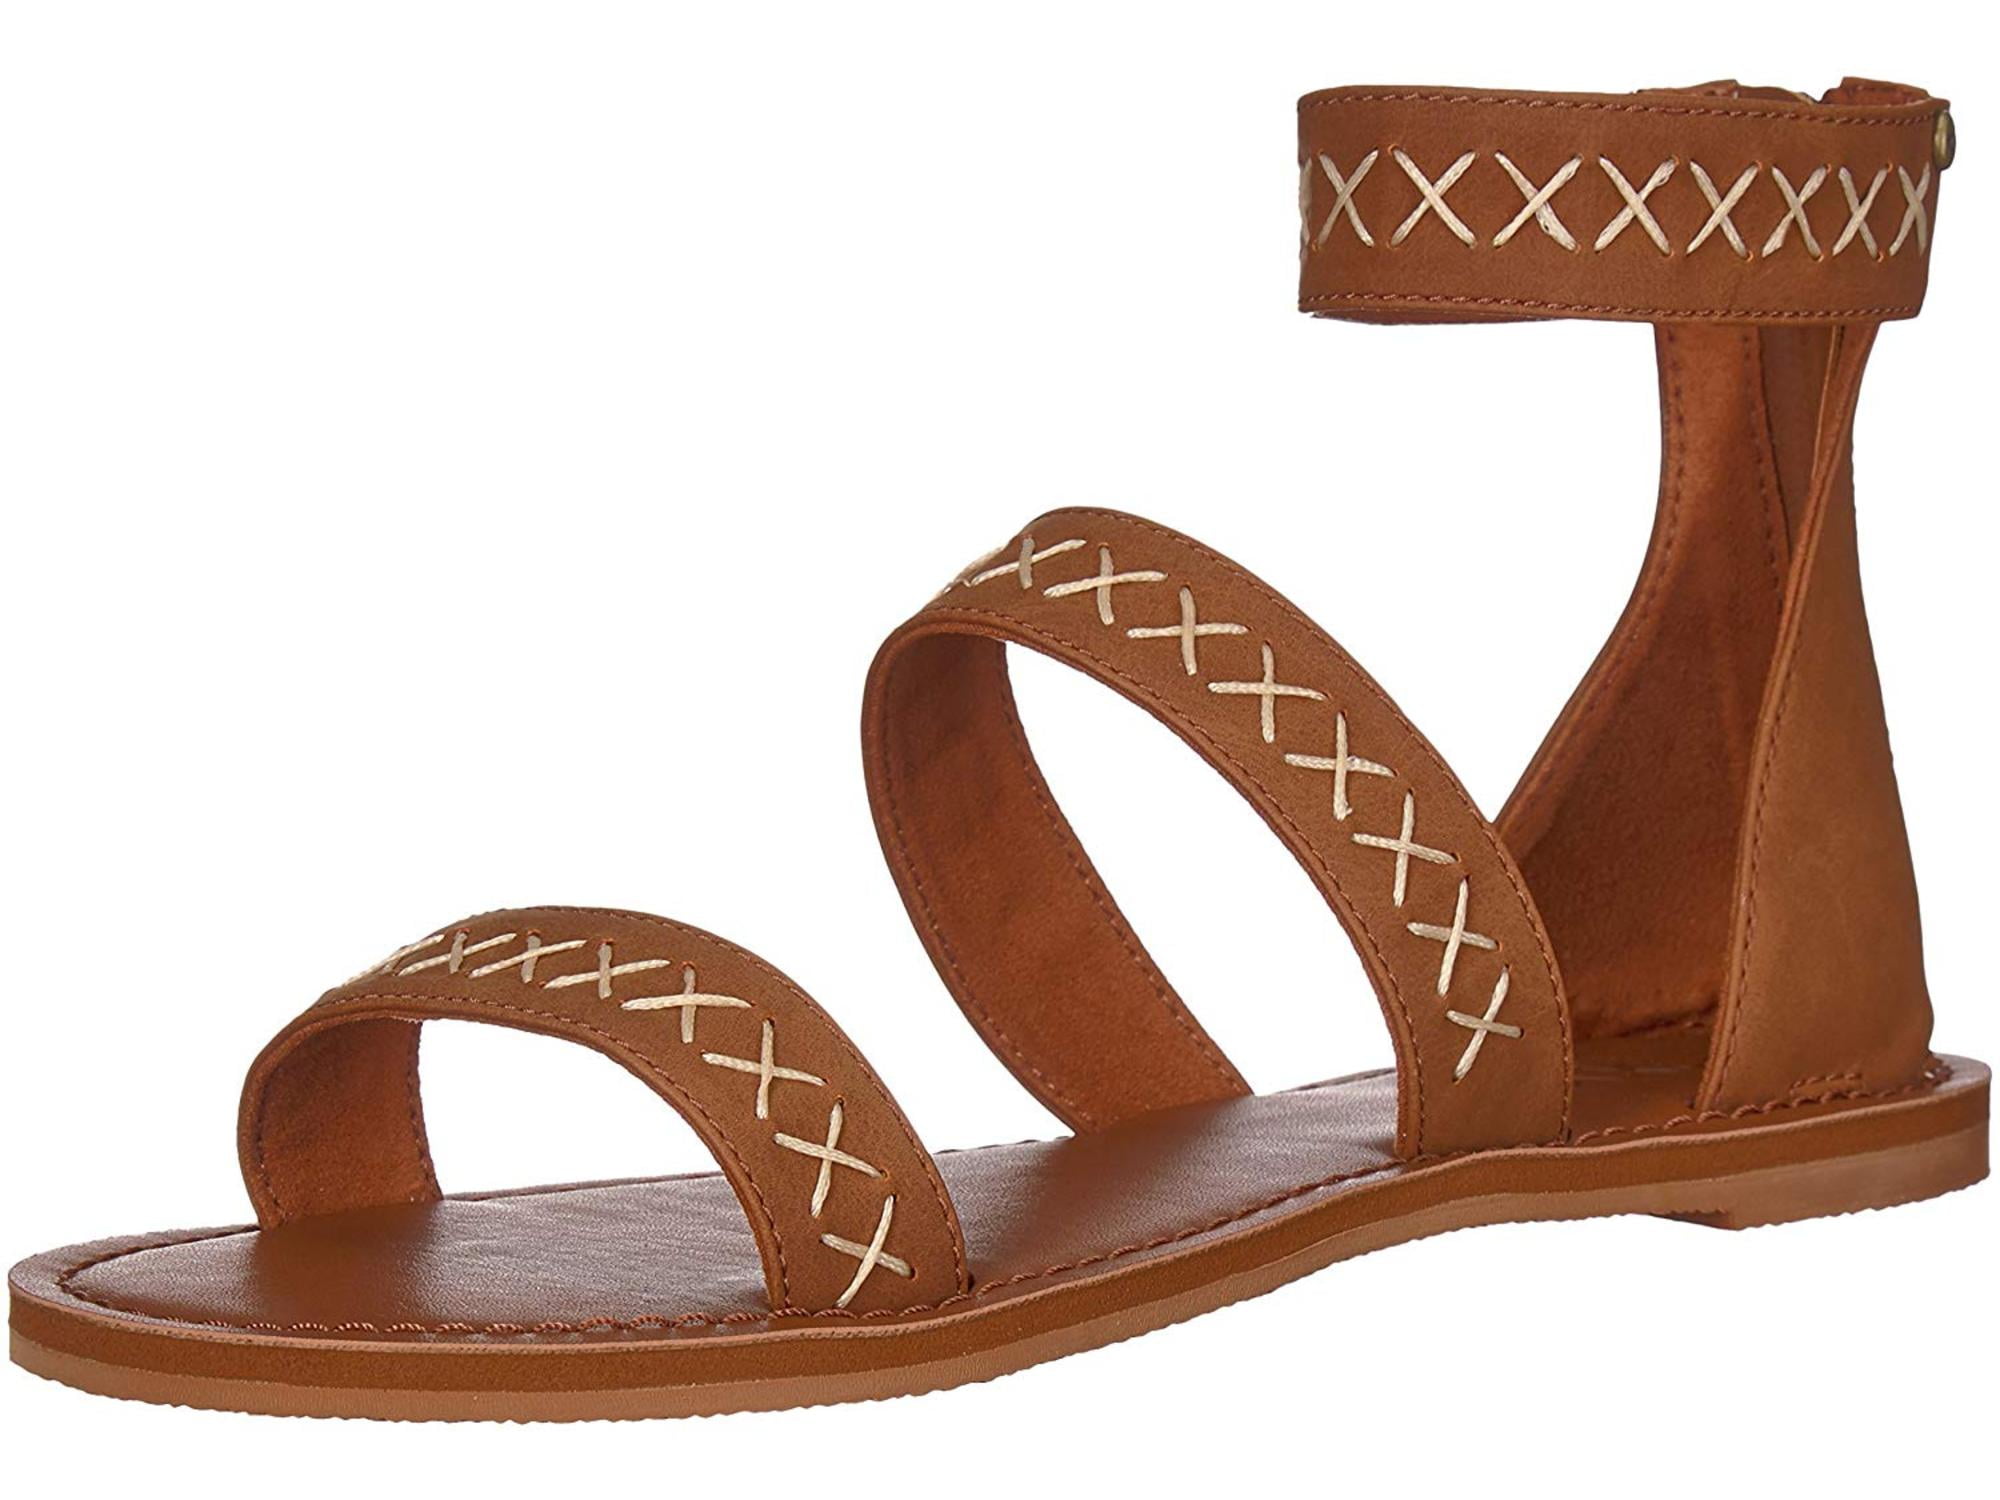 roxy sandals canada